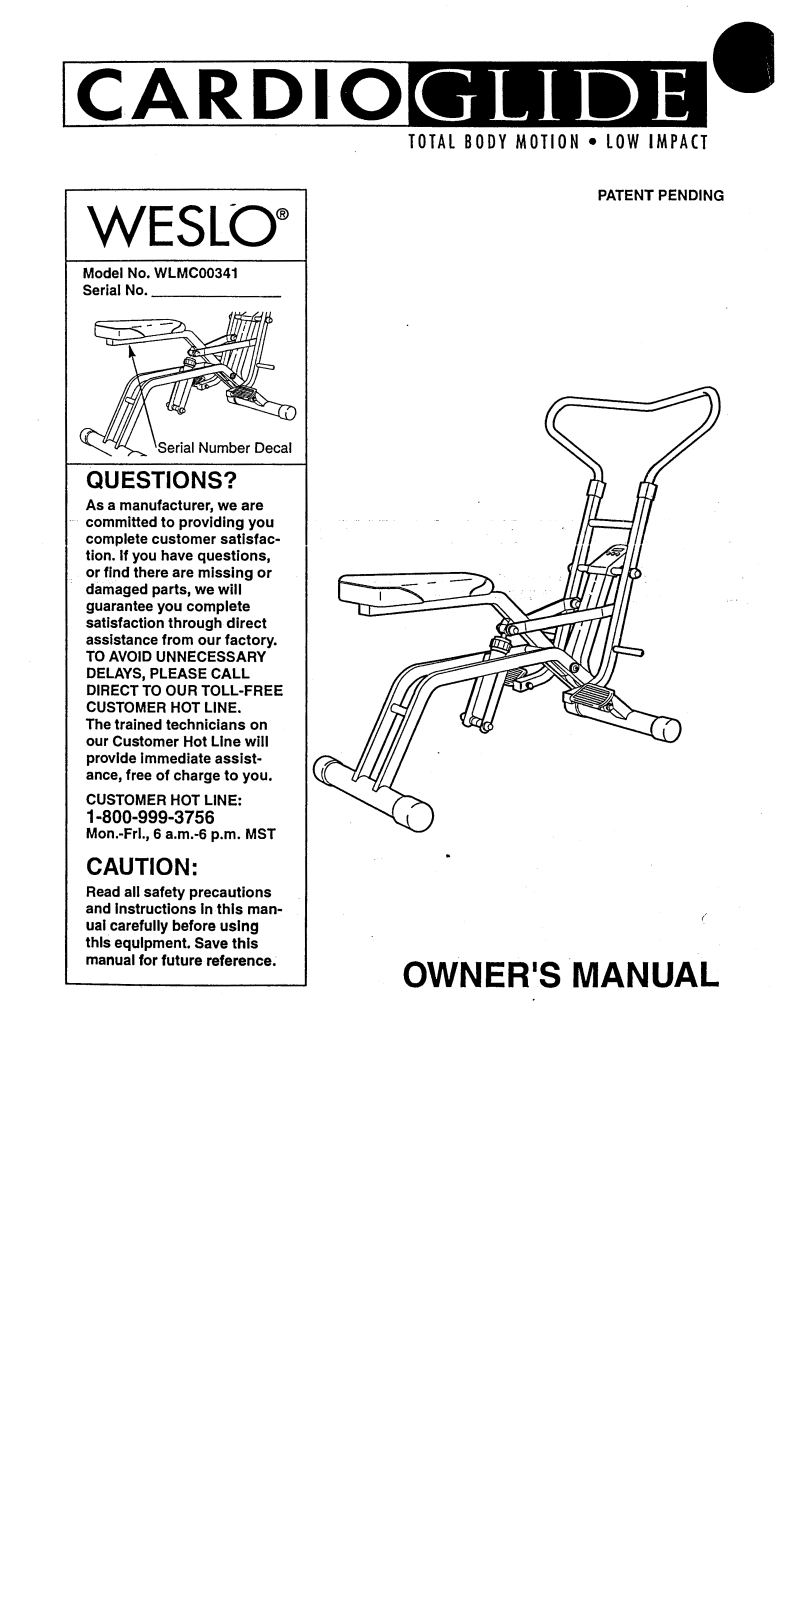 Weslo WLMC00341 Owner's Manual